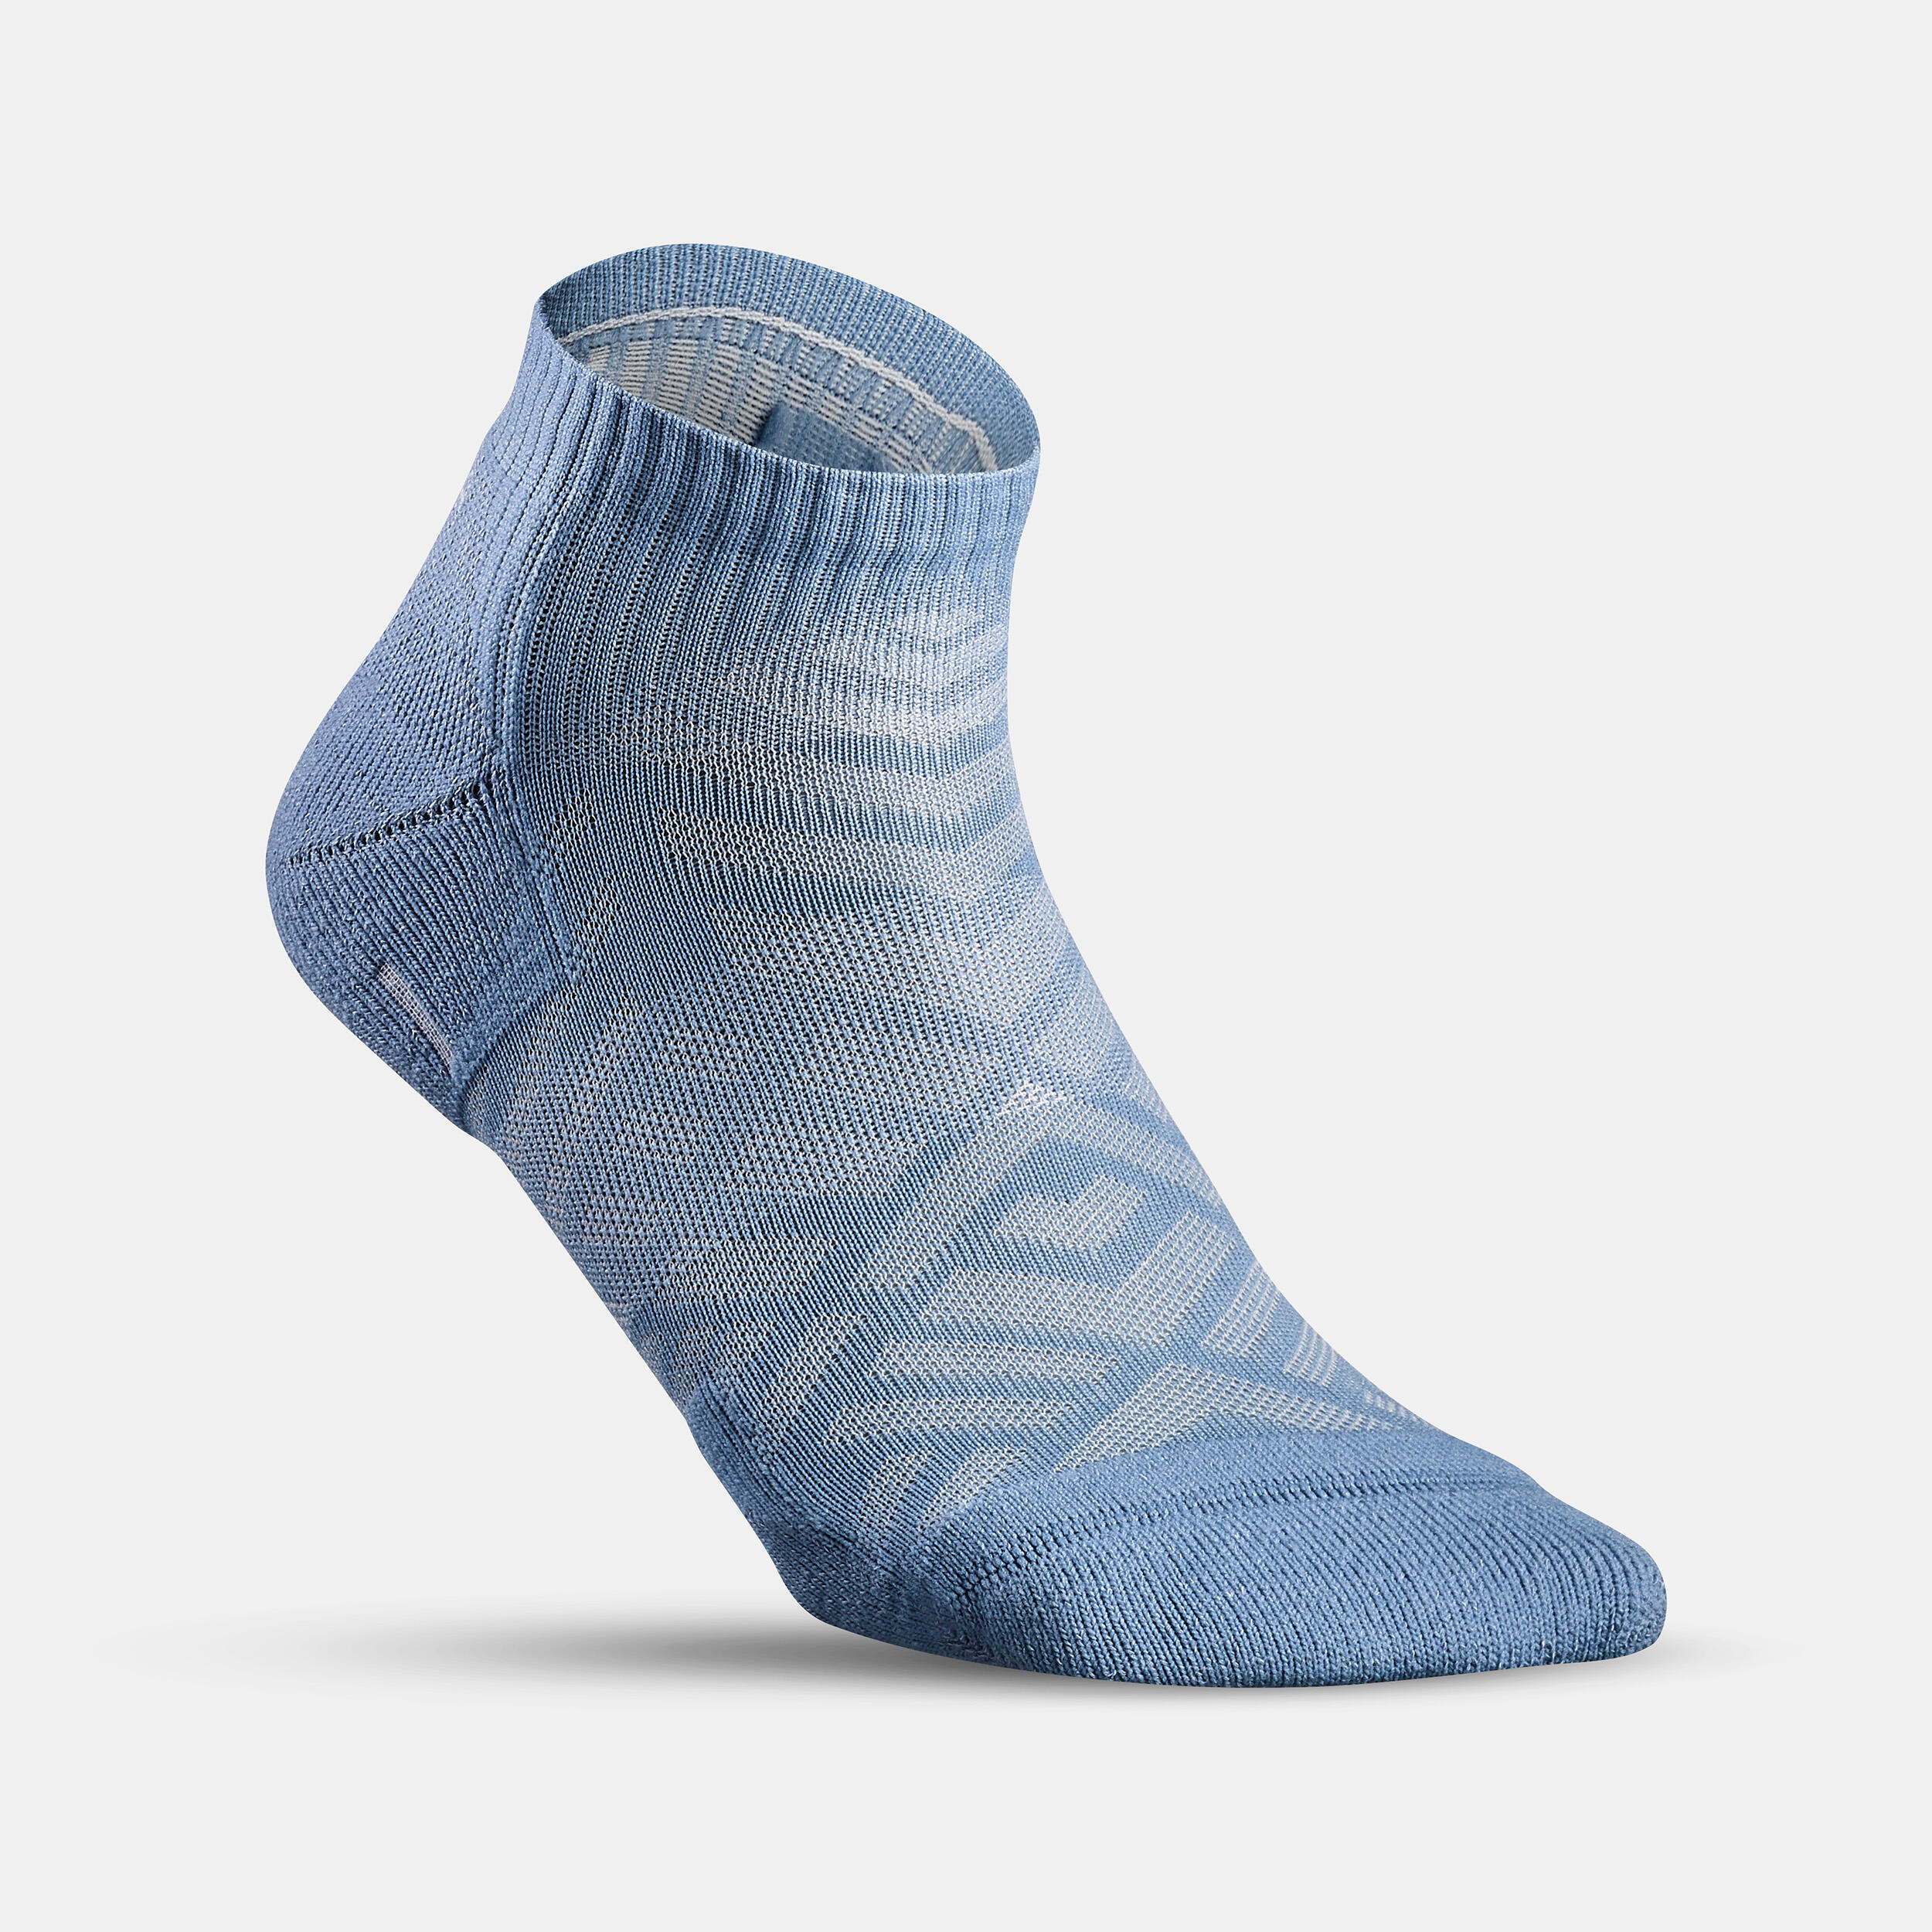 Hike 100 Low Socks  - Light Blue- Pack of 2 pairs 3/5